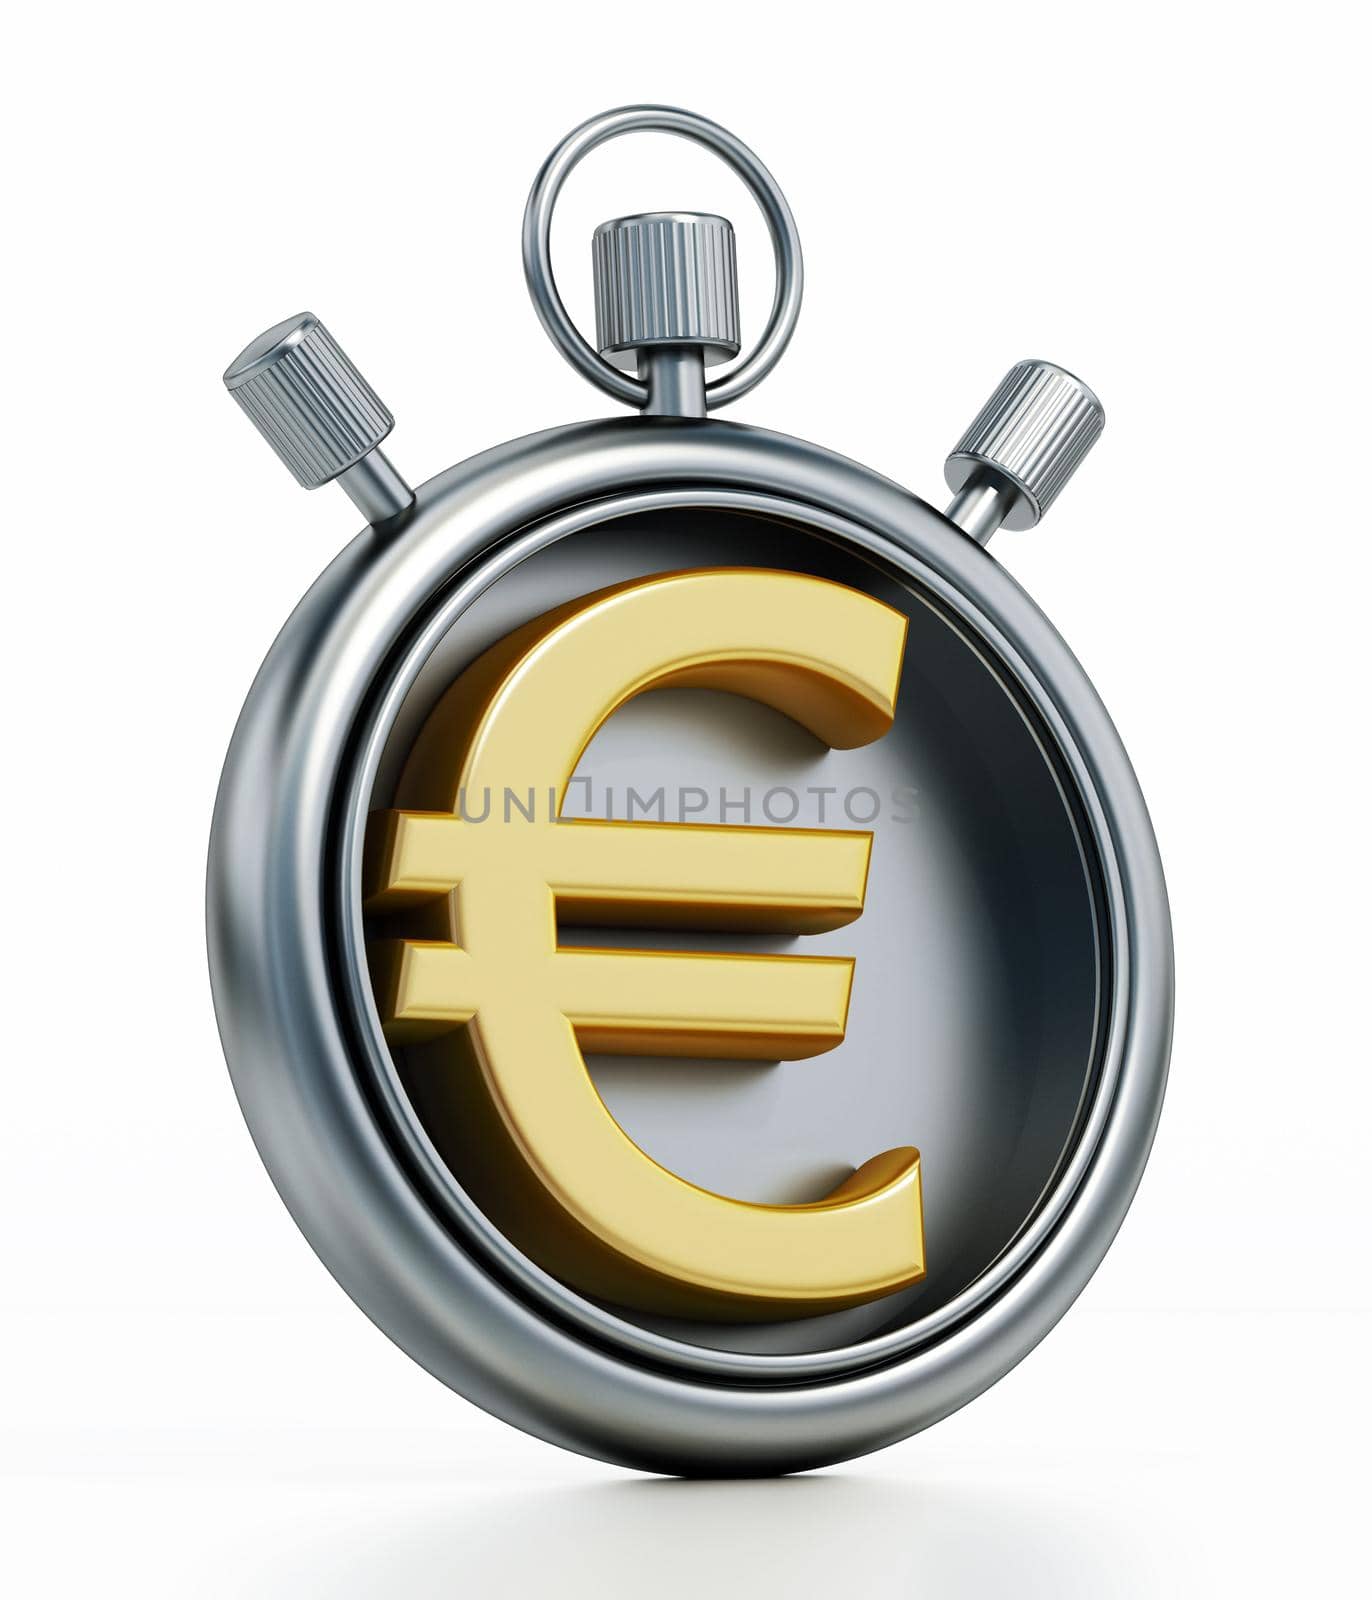 Euro symbol inside chronometer isolated on white background. 3D illustration by Simsek